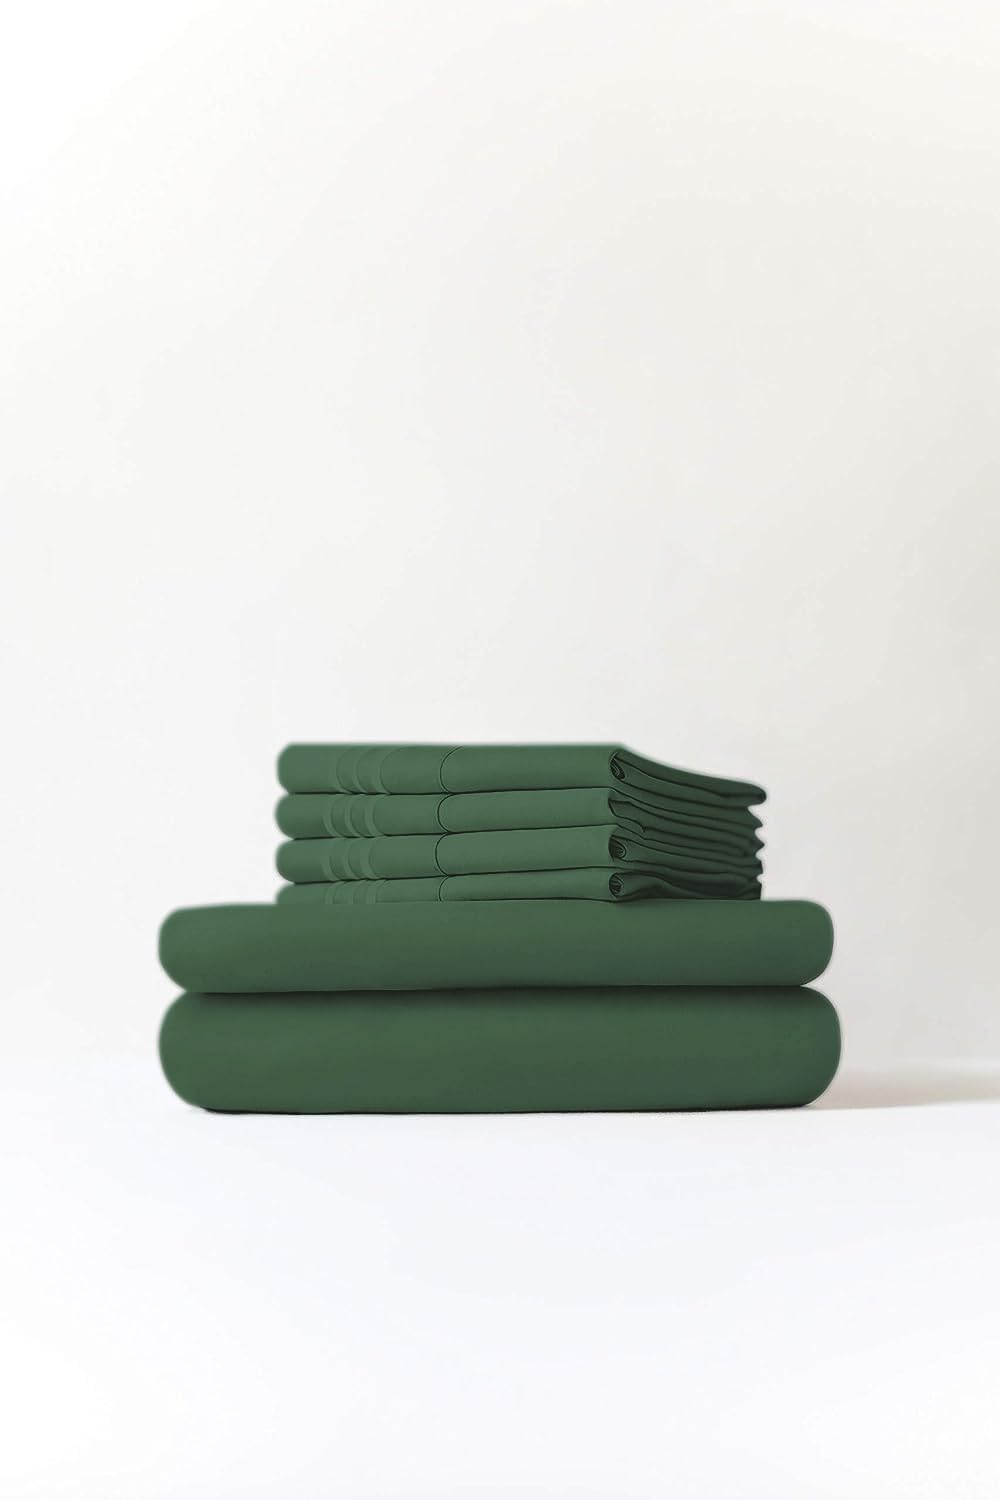 tes 6 Piece Deep Pocket Sheet Set New Colors - Emerald Green